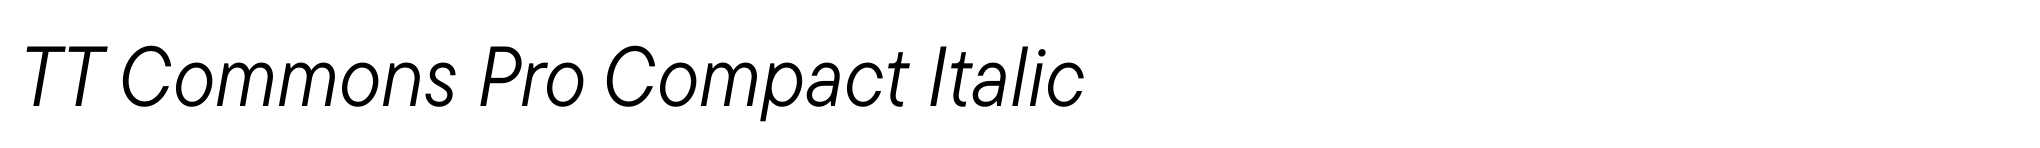 TT Commons Pro Compact Italic image